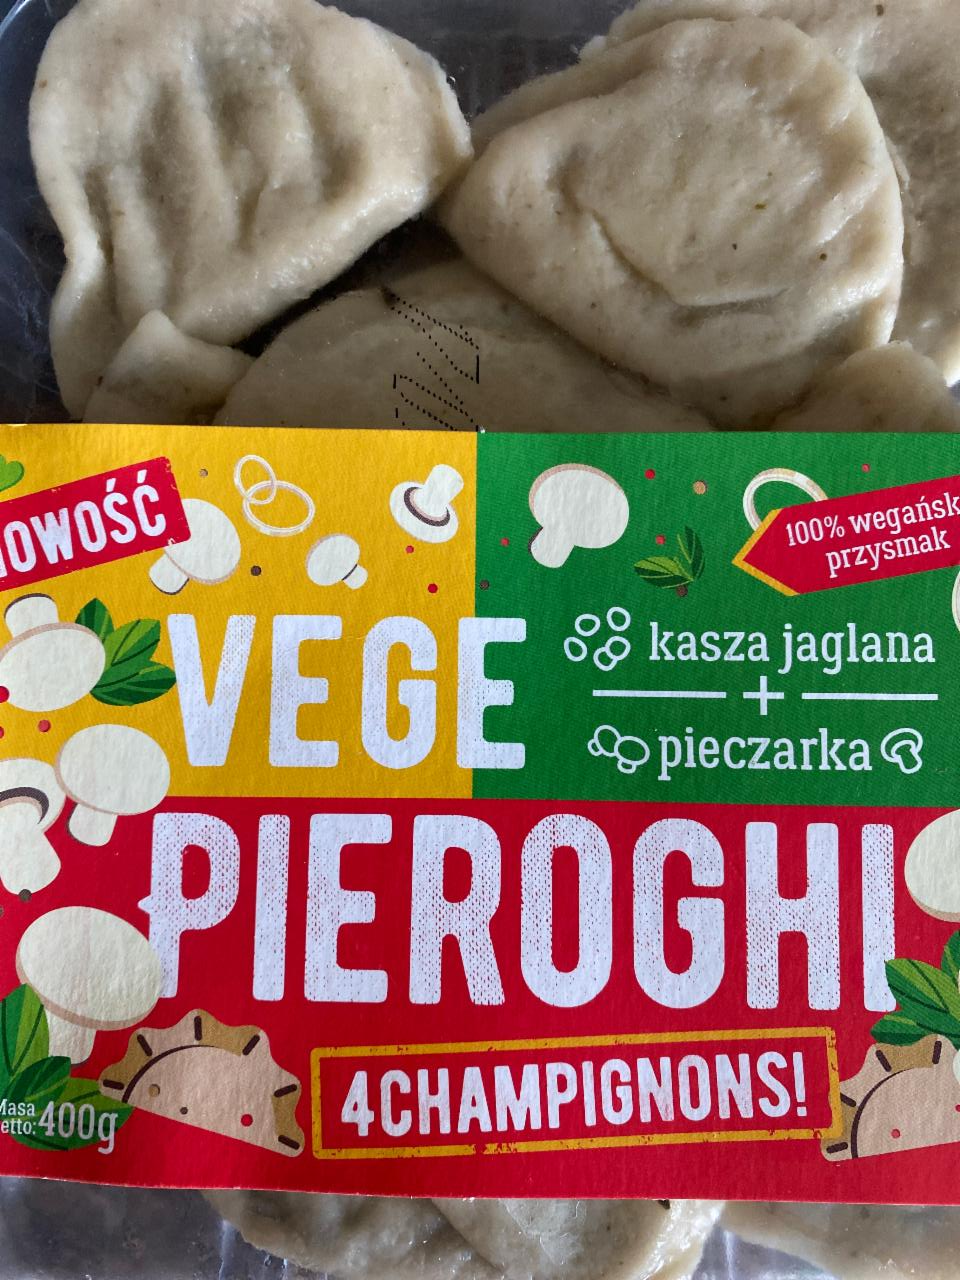 Zdjęcia - Vege Pieroghi 4 champignons Kasza jaglana + pieczarka